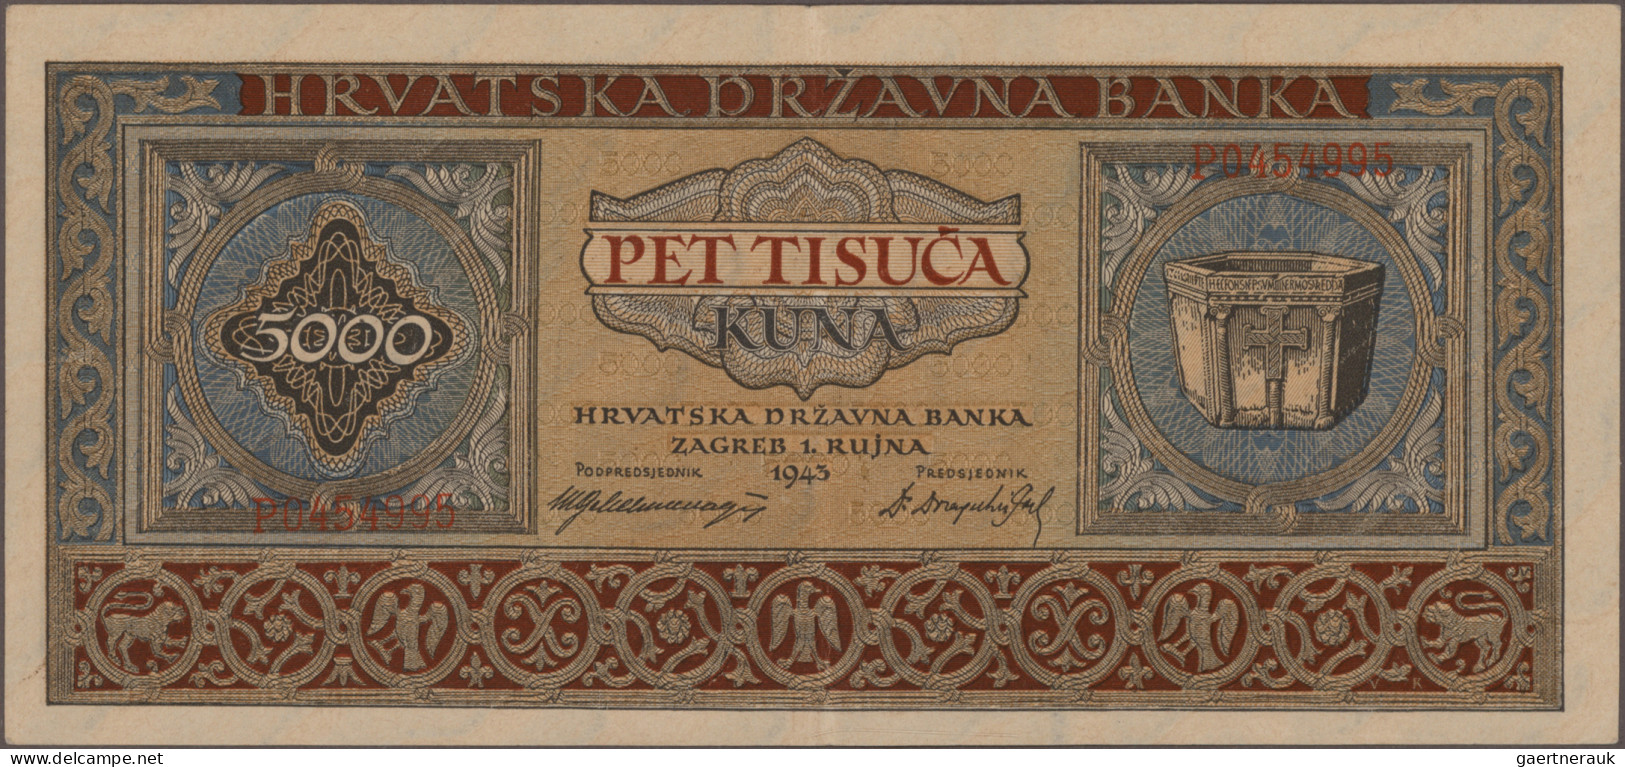 Croatia: Croatia and Serbian Krajina, lot with 160 banknotes, series 1941-1993,